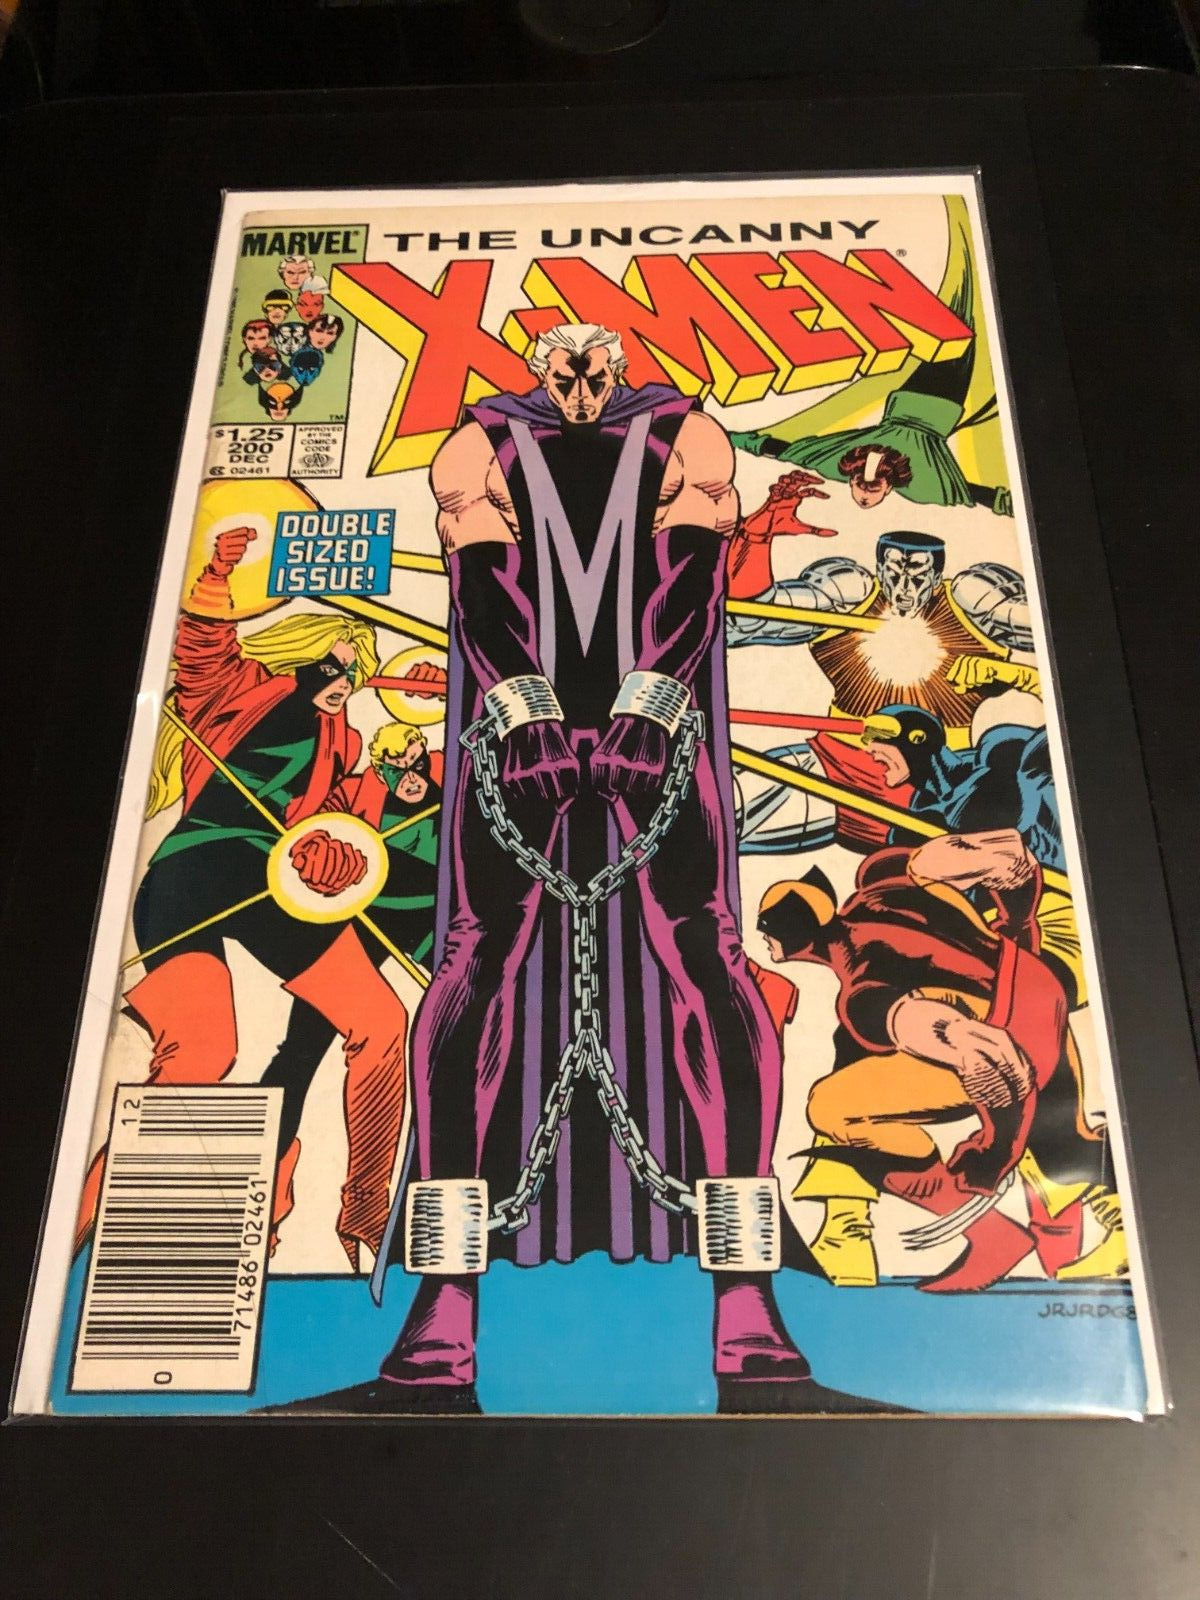 Uncanny X-Men #200-X-men 92 Magneto trial, Disney+